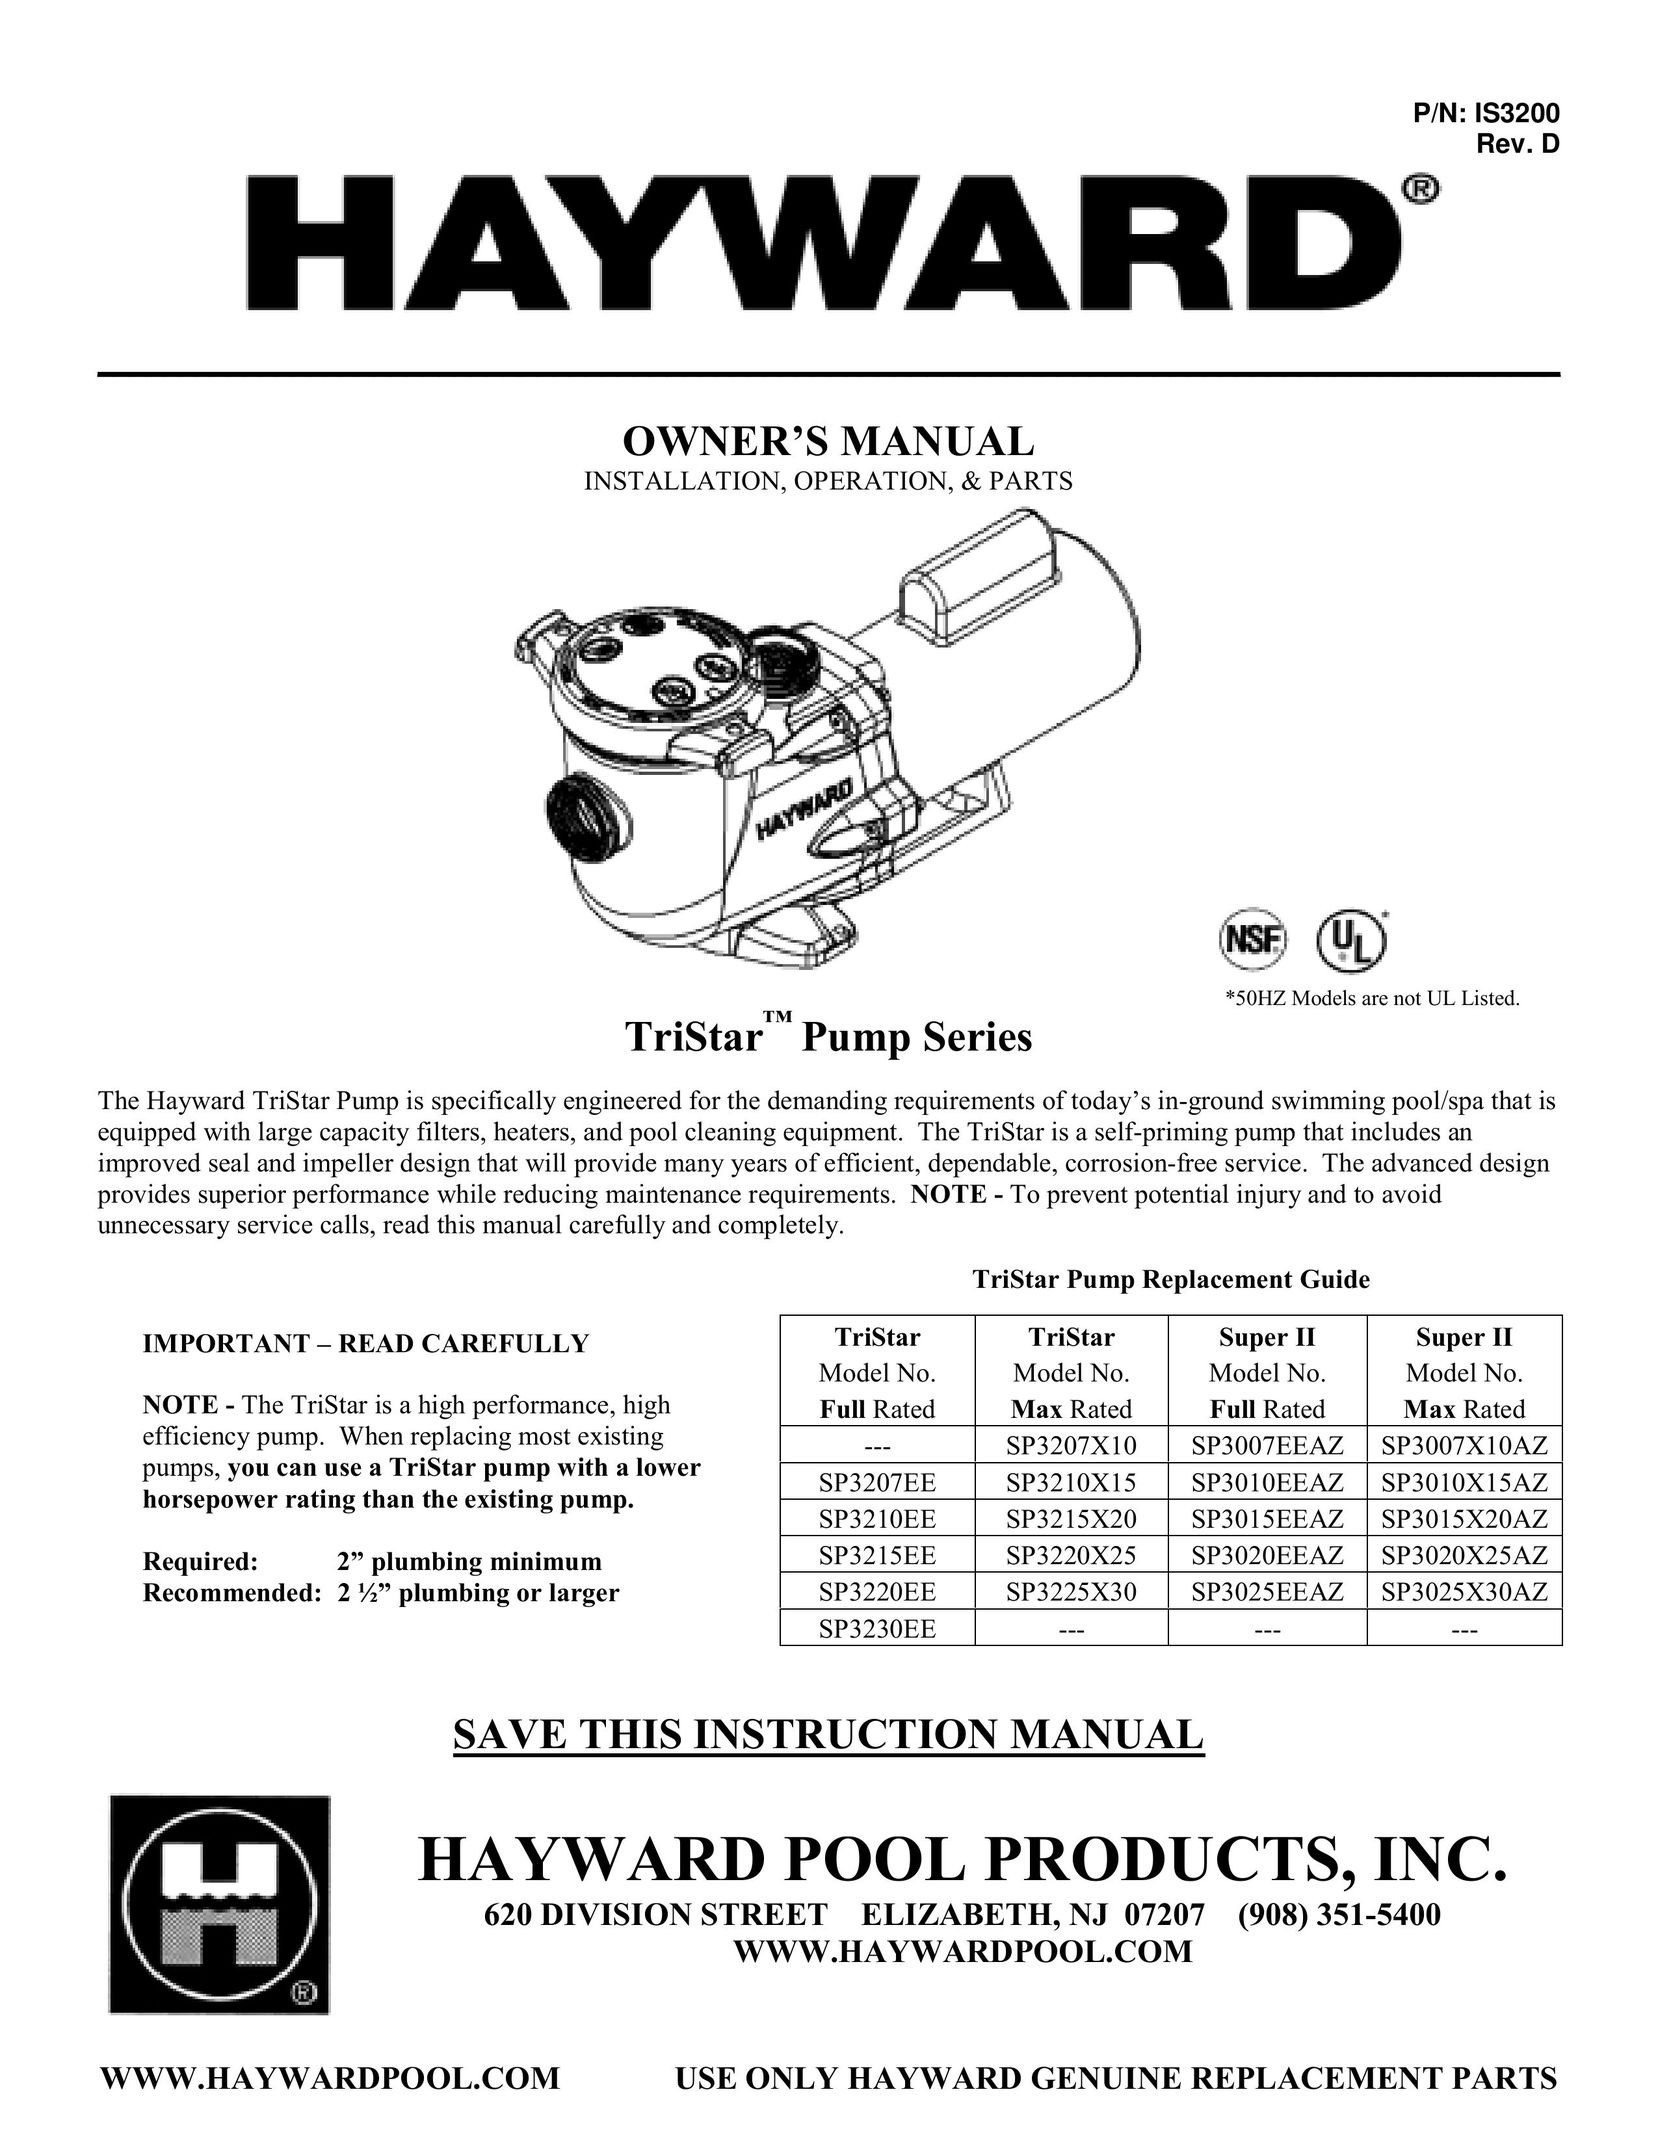 TriStar SP3015X20AZ Heat Pump User Manual